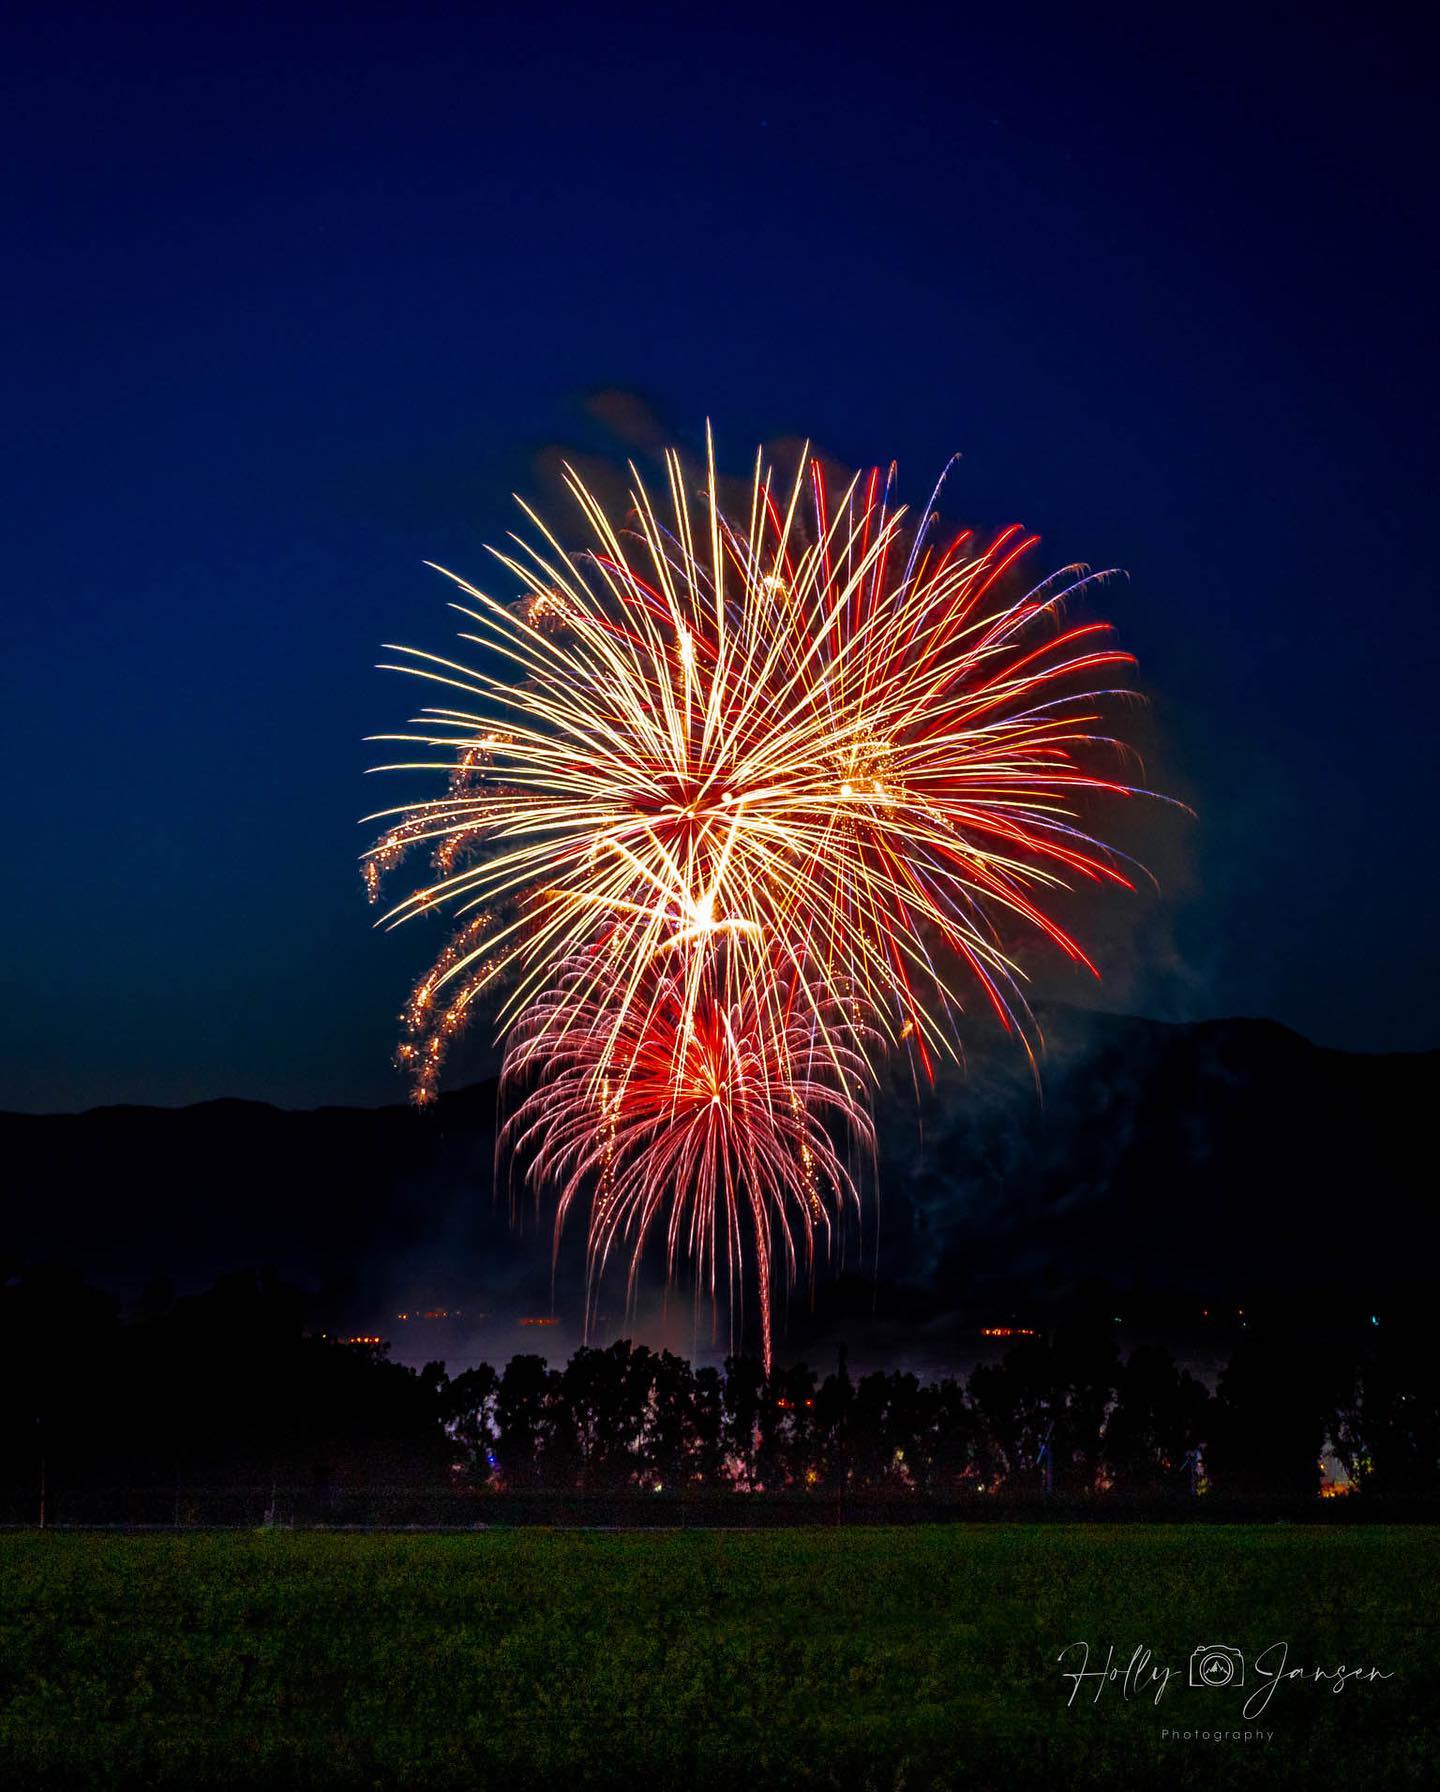 City of Camarillo's 4th of July Fireworks Show at Camarillo Premium